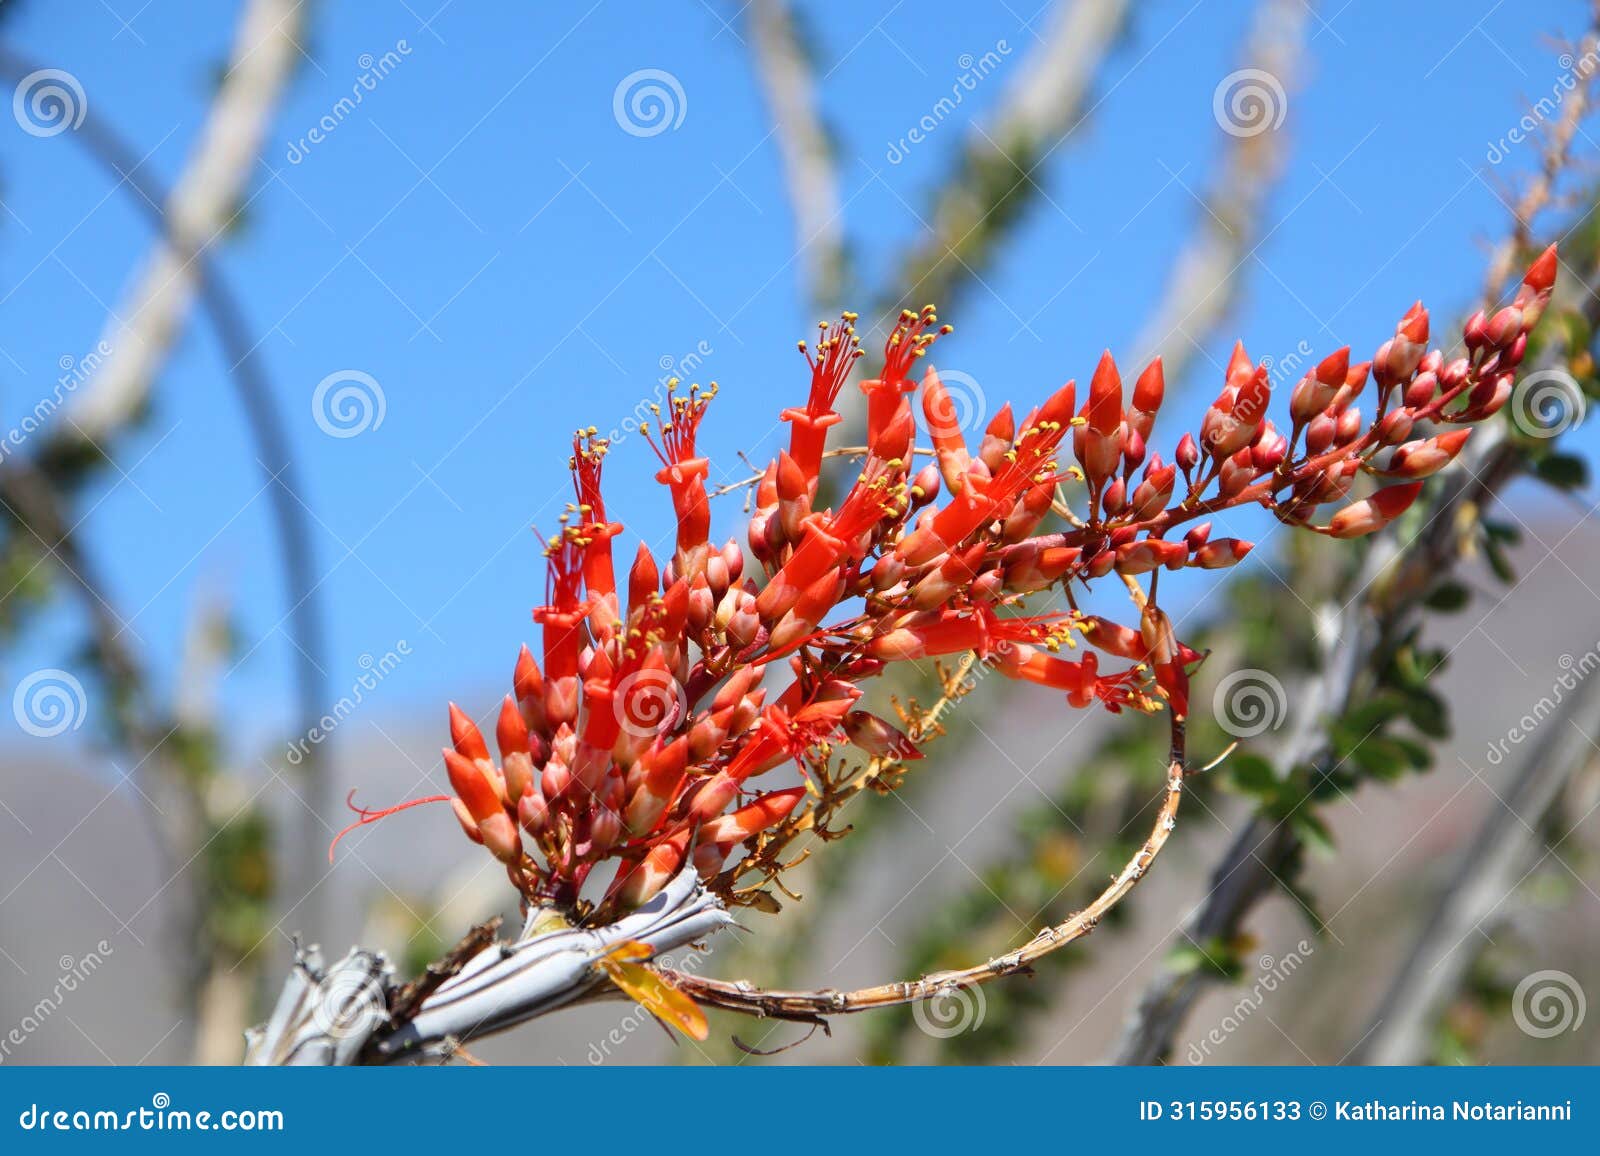 california park series - anza-borrego desert - ocotillo plant - fouquieria splendens